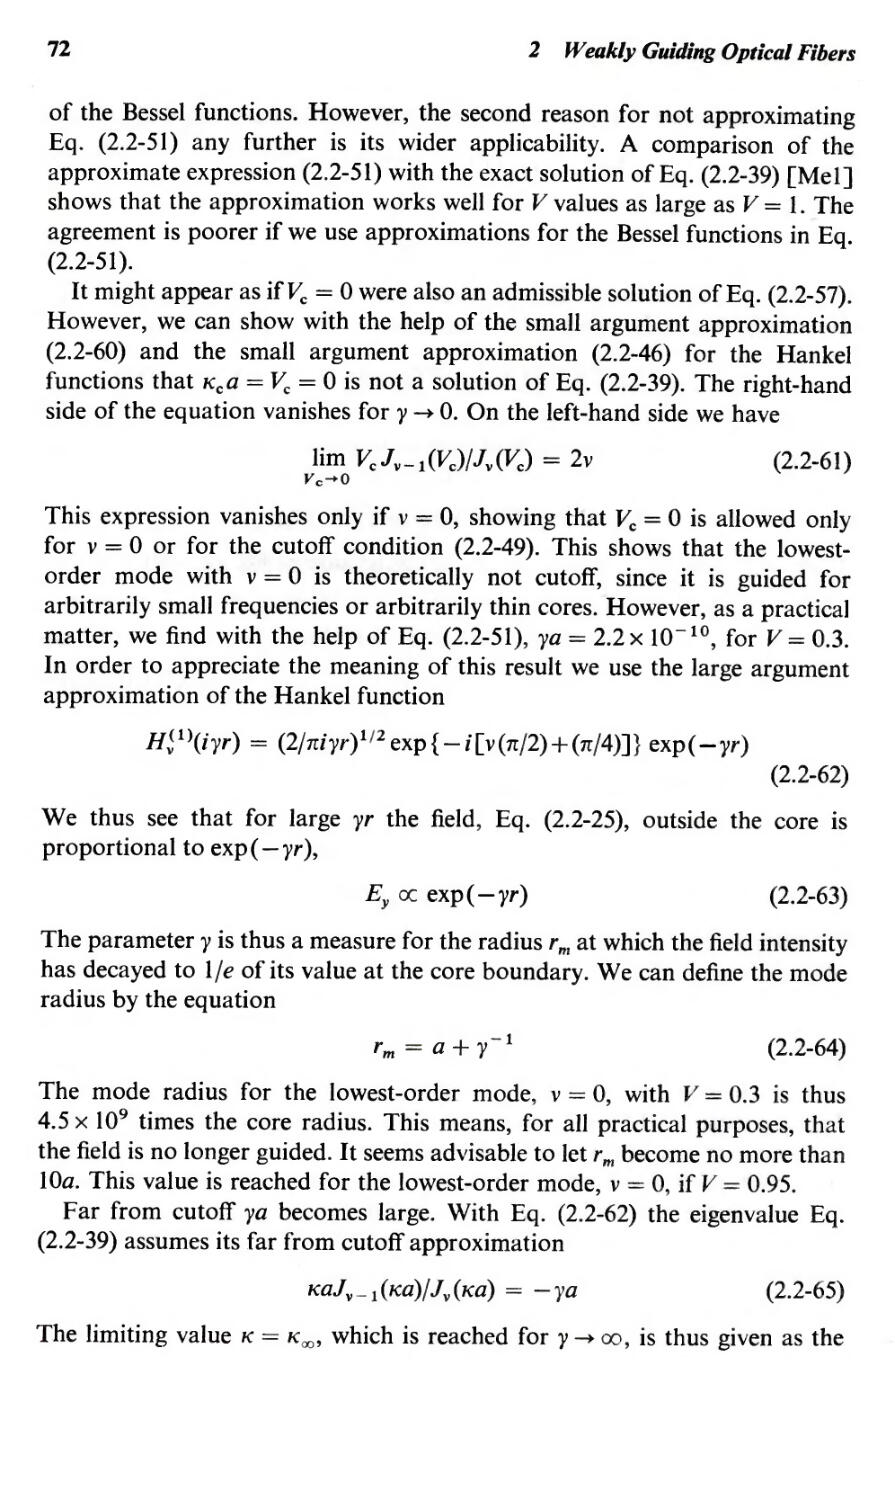 --- large argument, 72
--- approximation for large argument, 72
Mode radius, 72